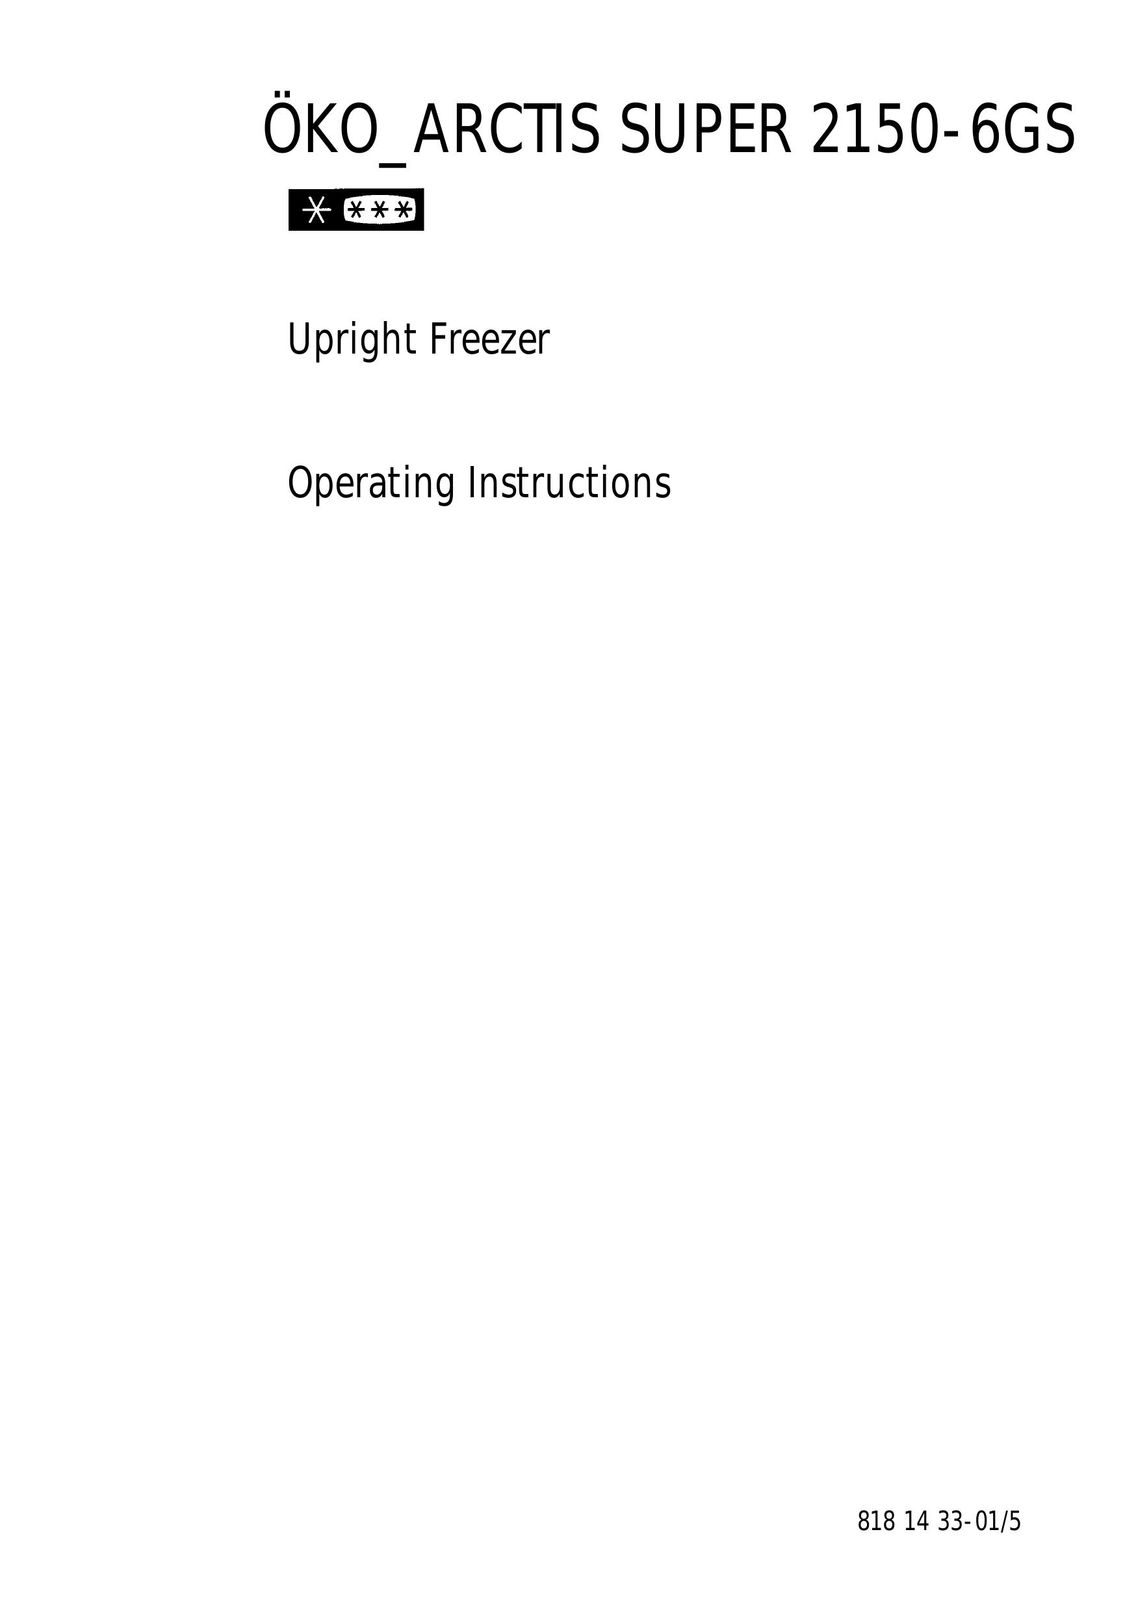 AEG 2150-6GS Freezer User Manual